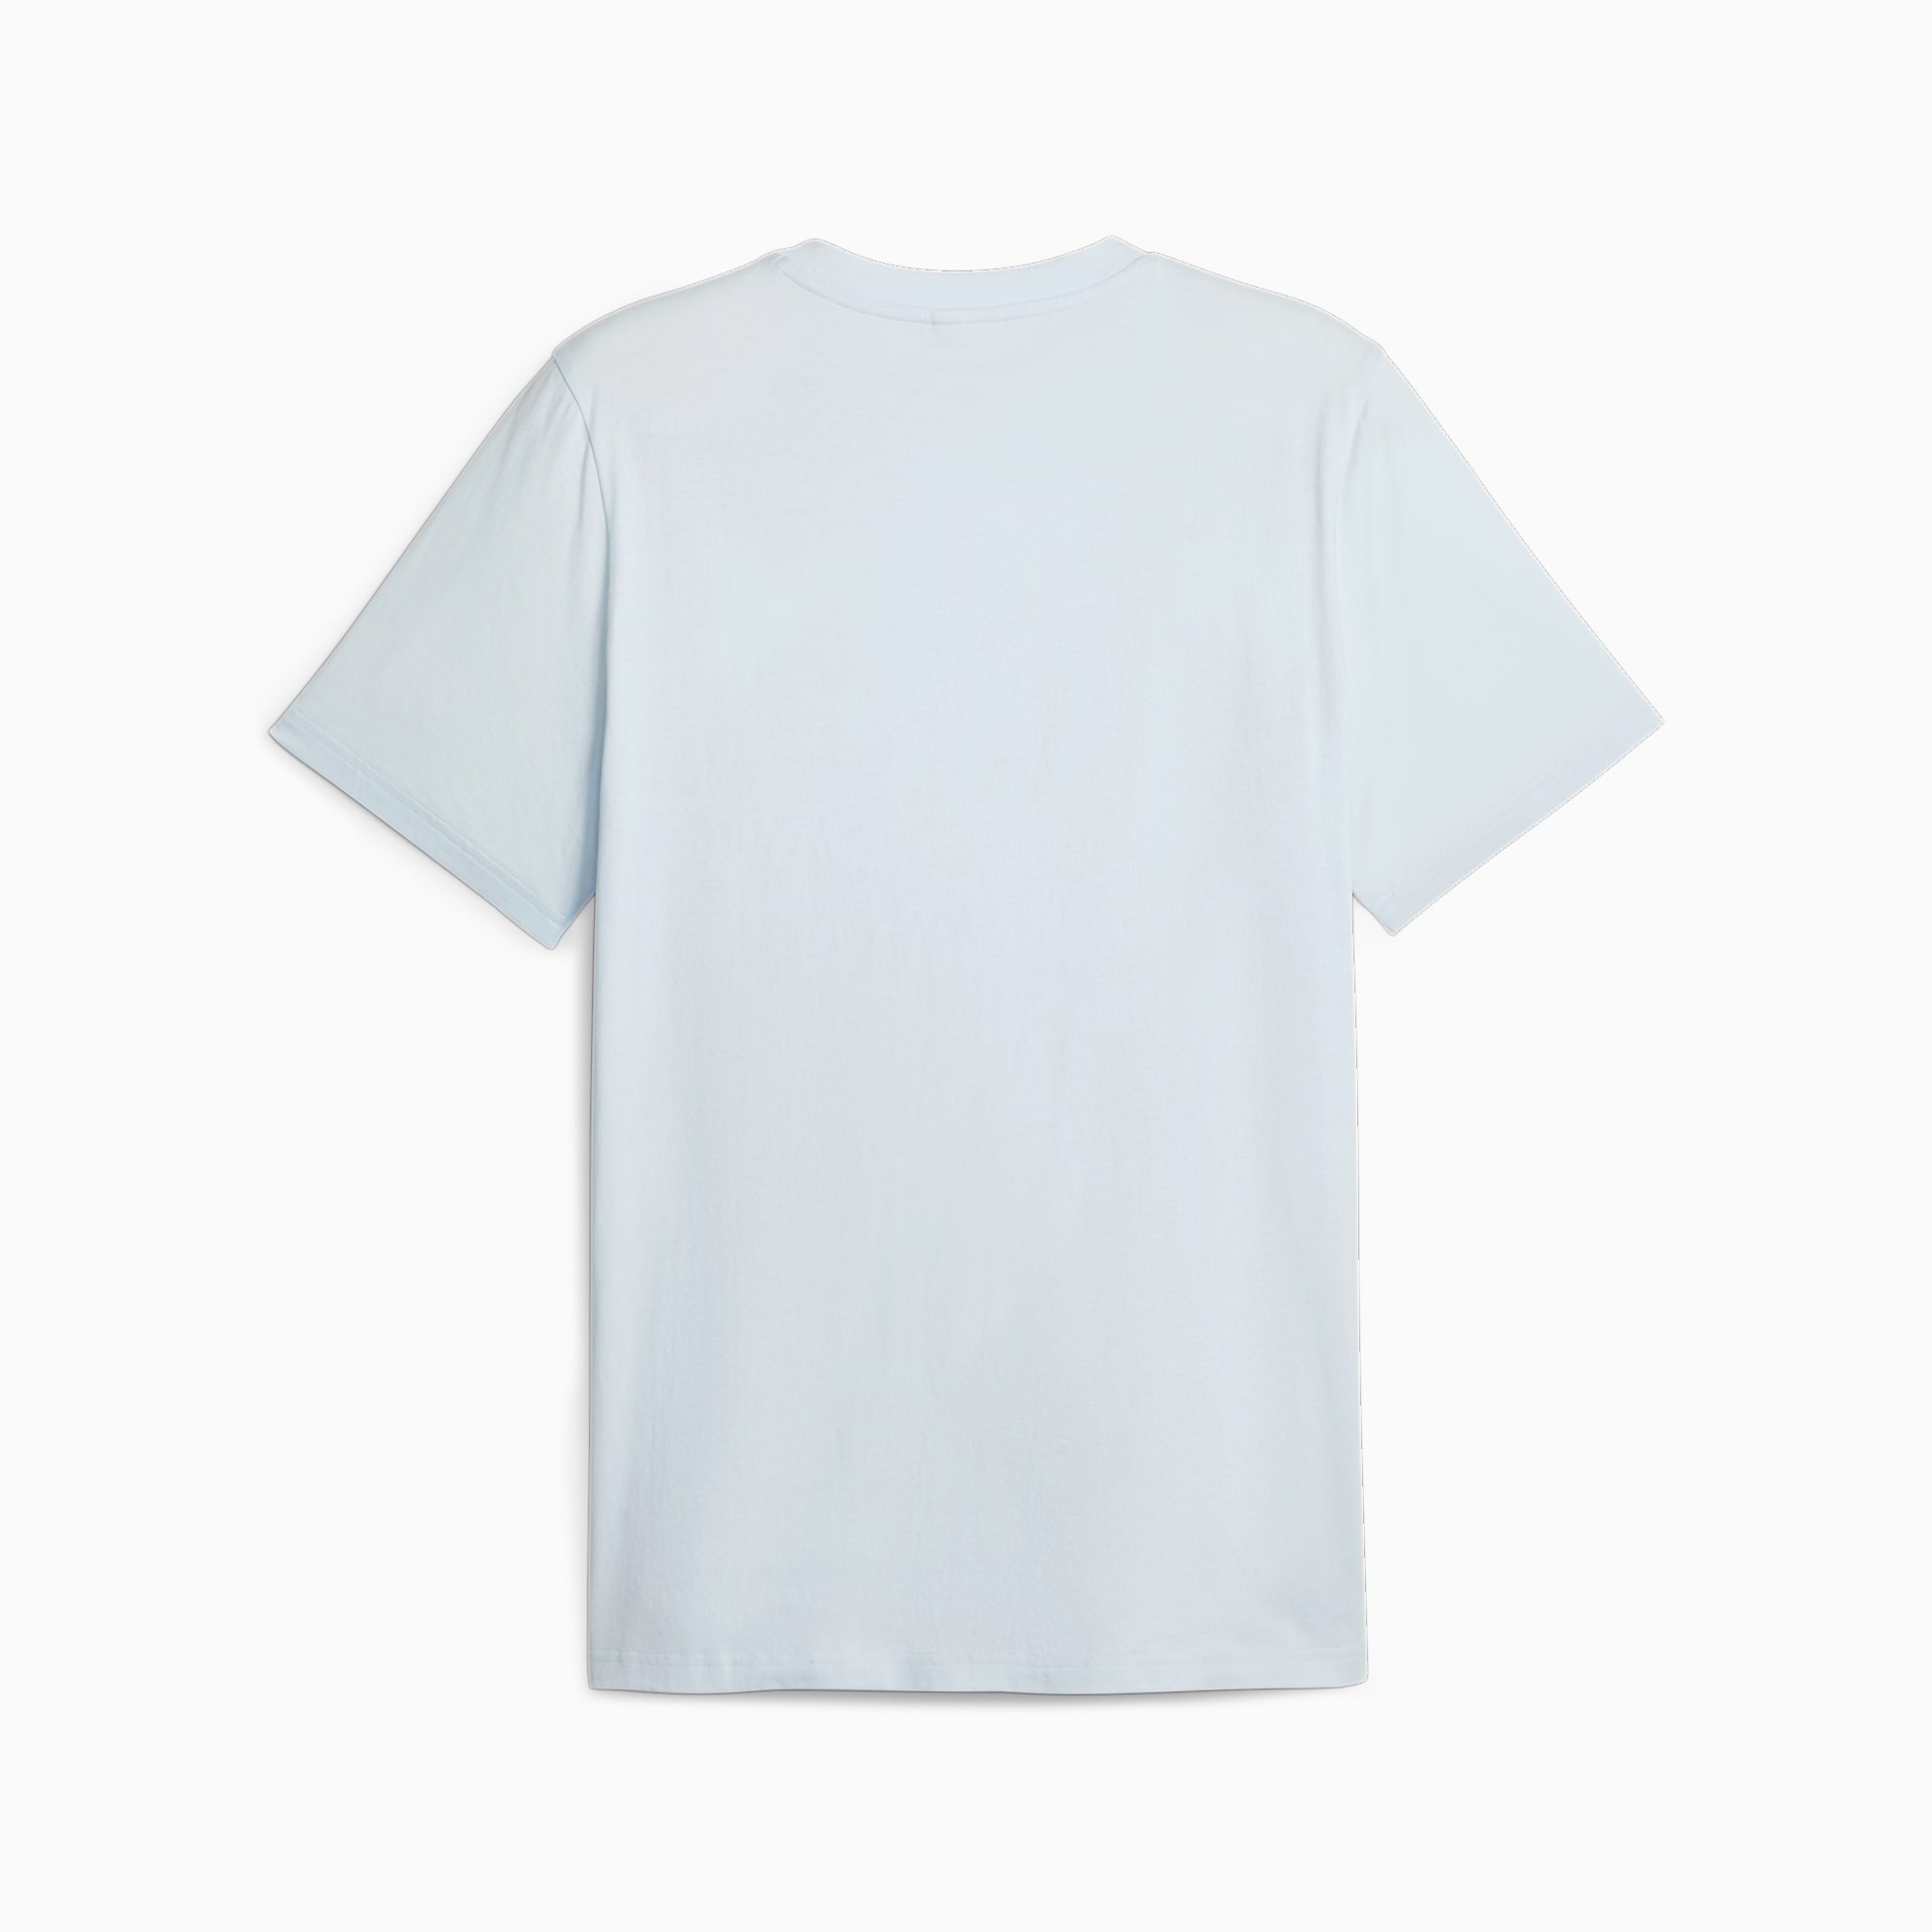 PUMA Classics Small Logo T-Shirt Men, Icy Blue, Size XS, Clothing